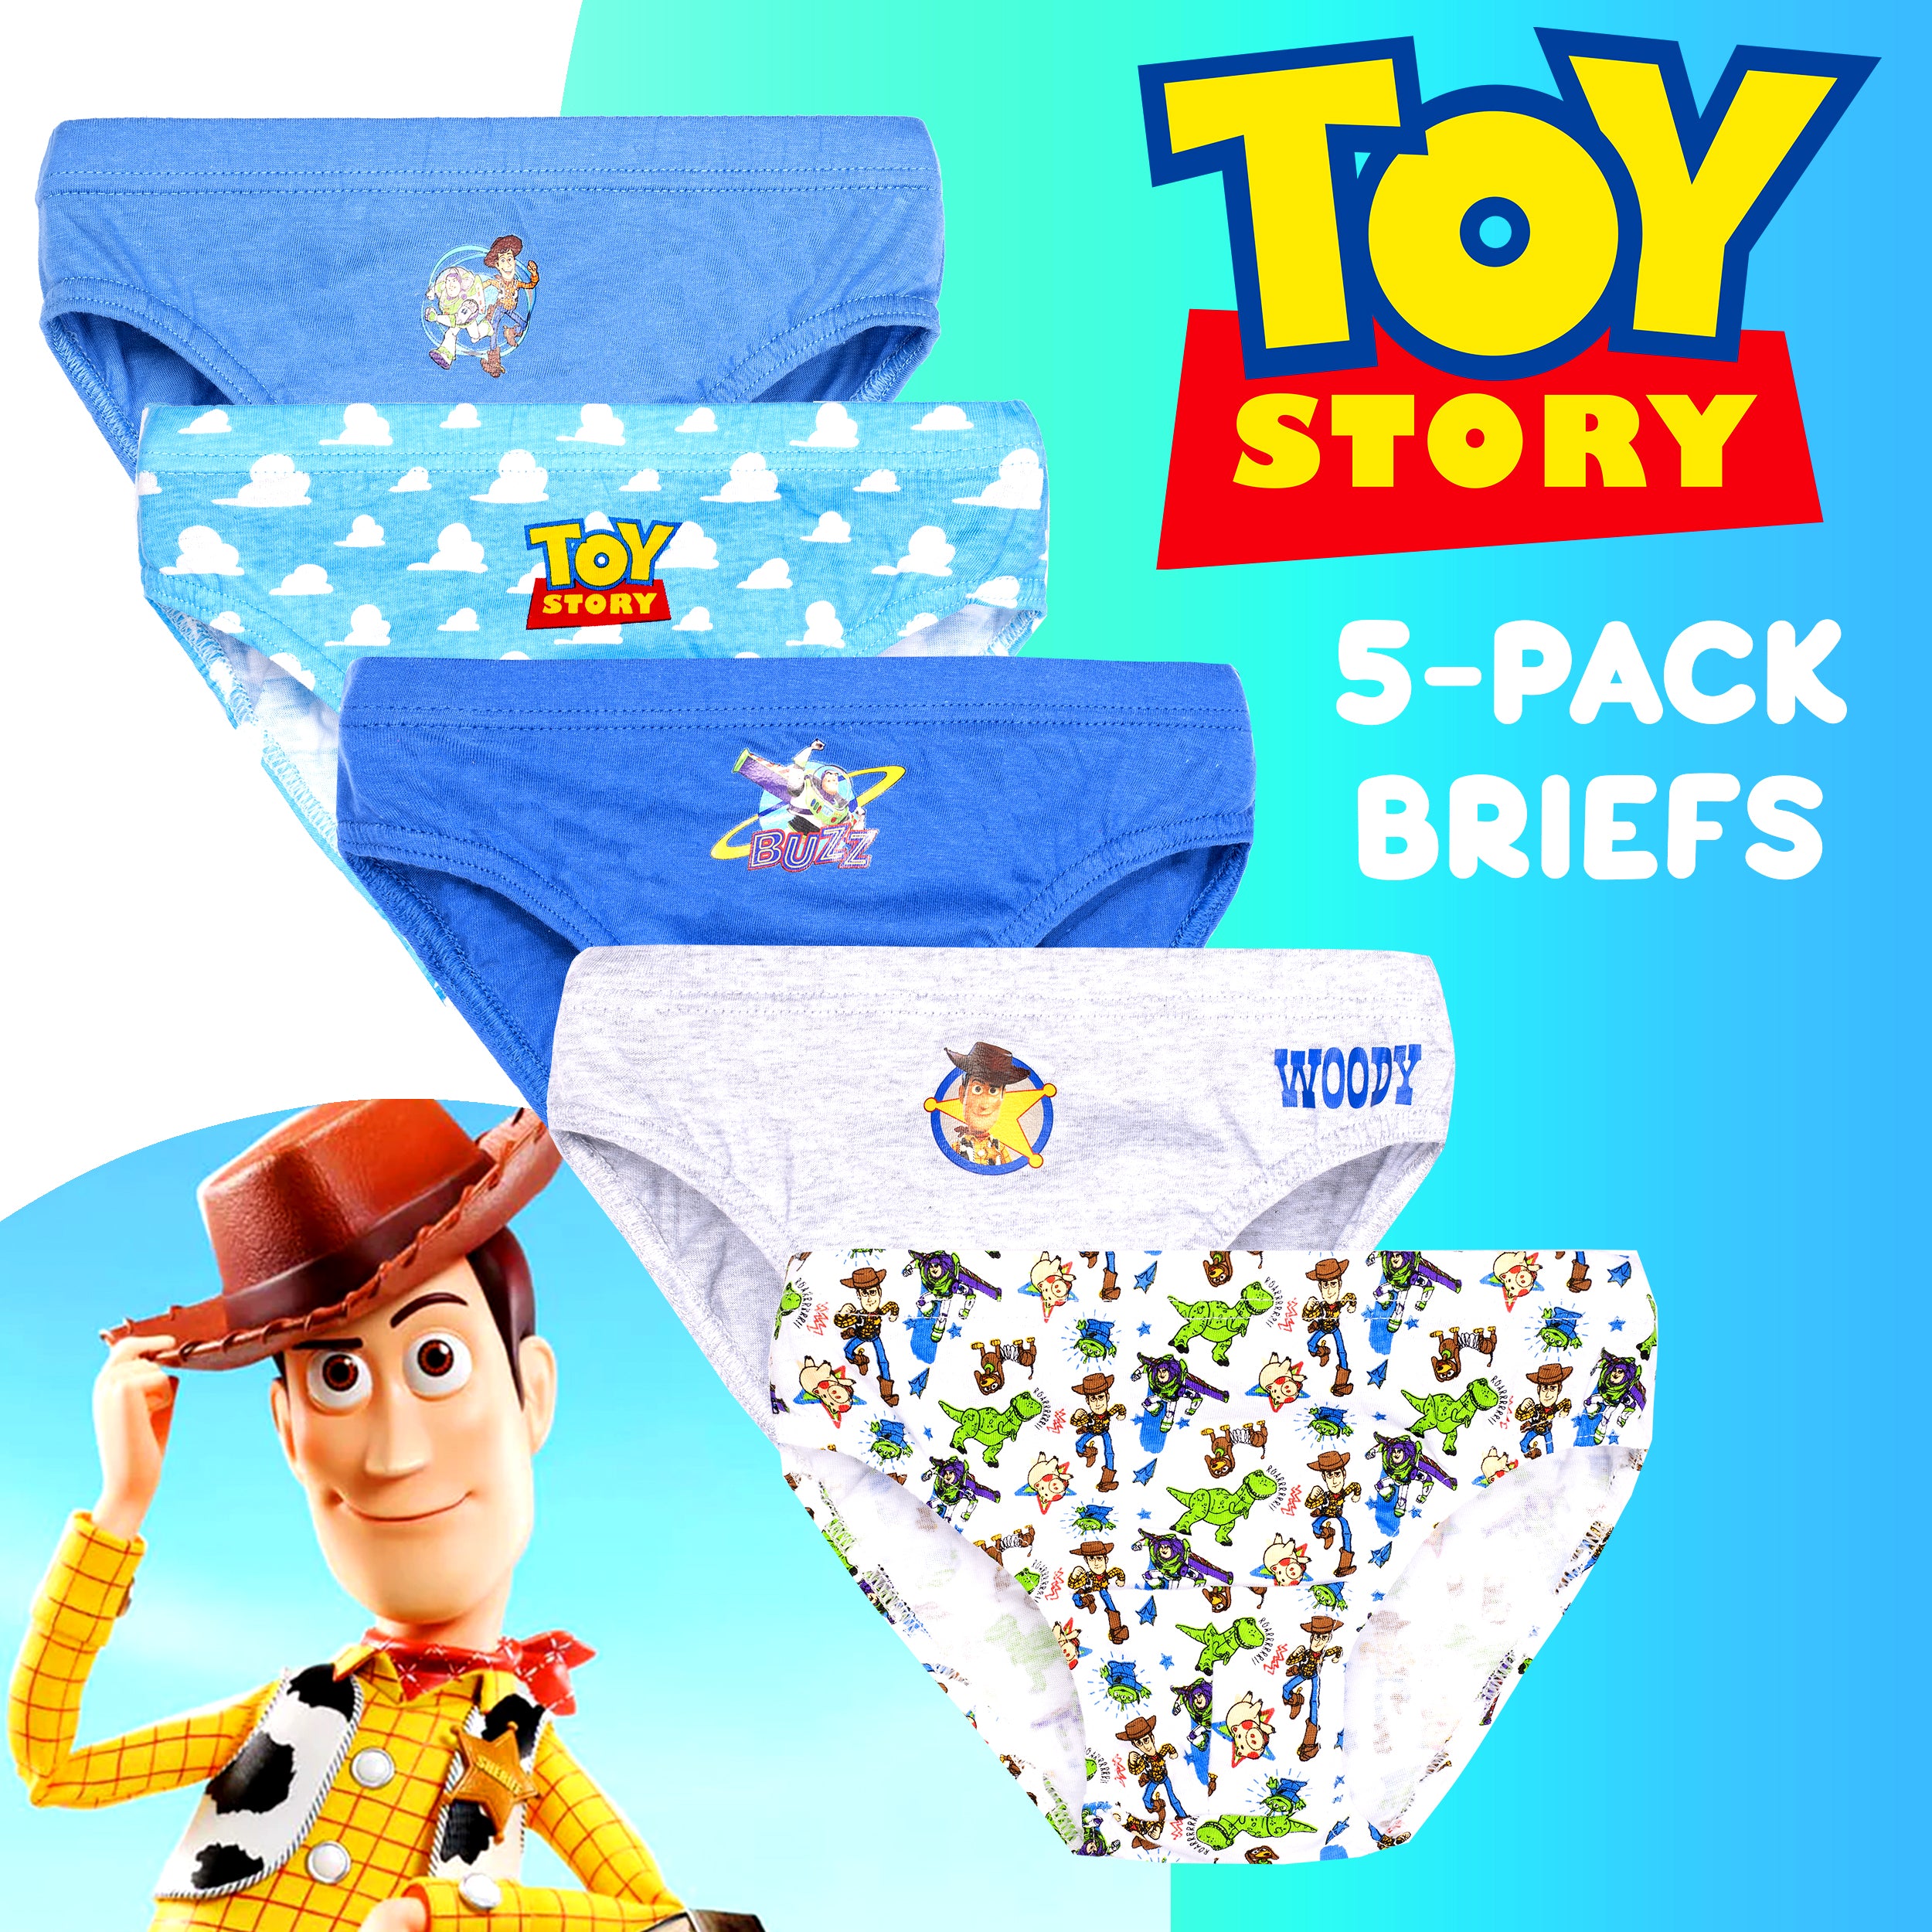 Disney Toy Story 4 Underwear 5 Pack Briefs Boy's Size 8 New Woody